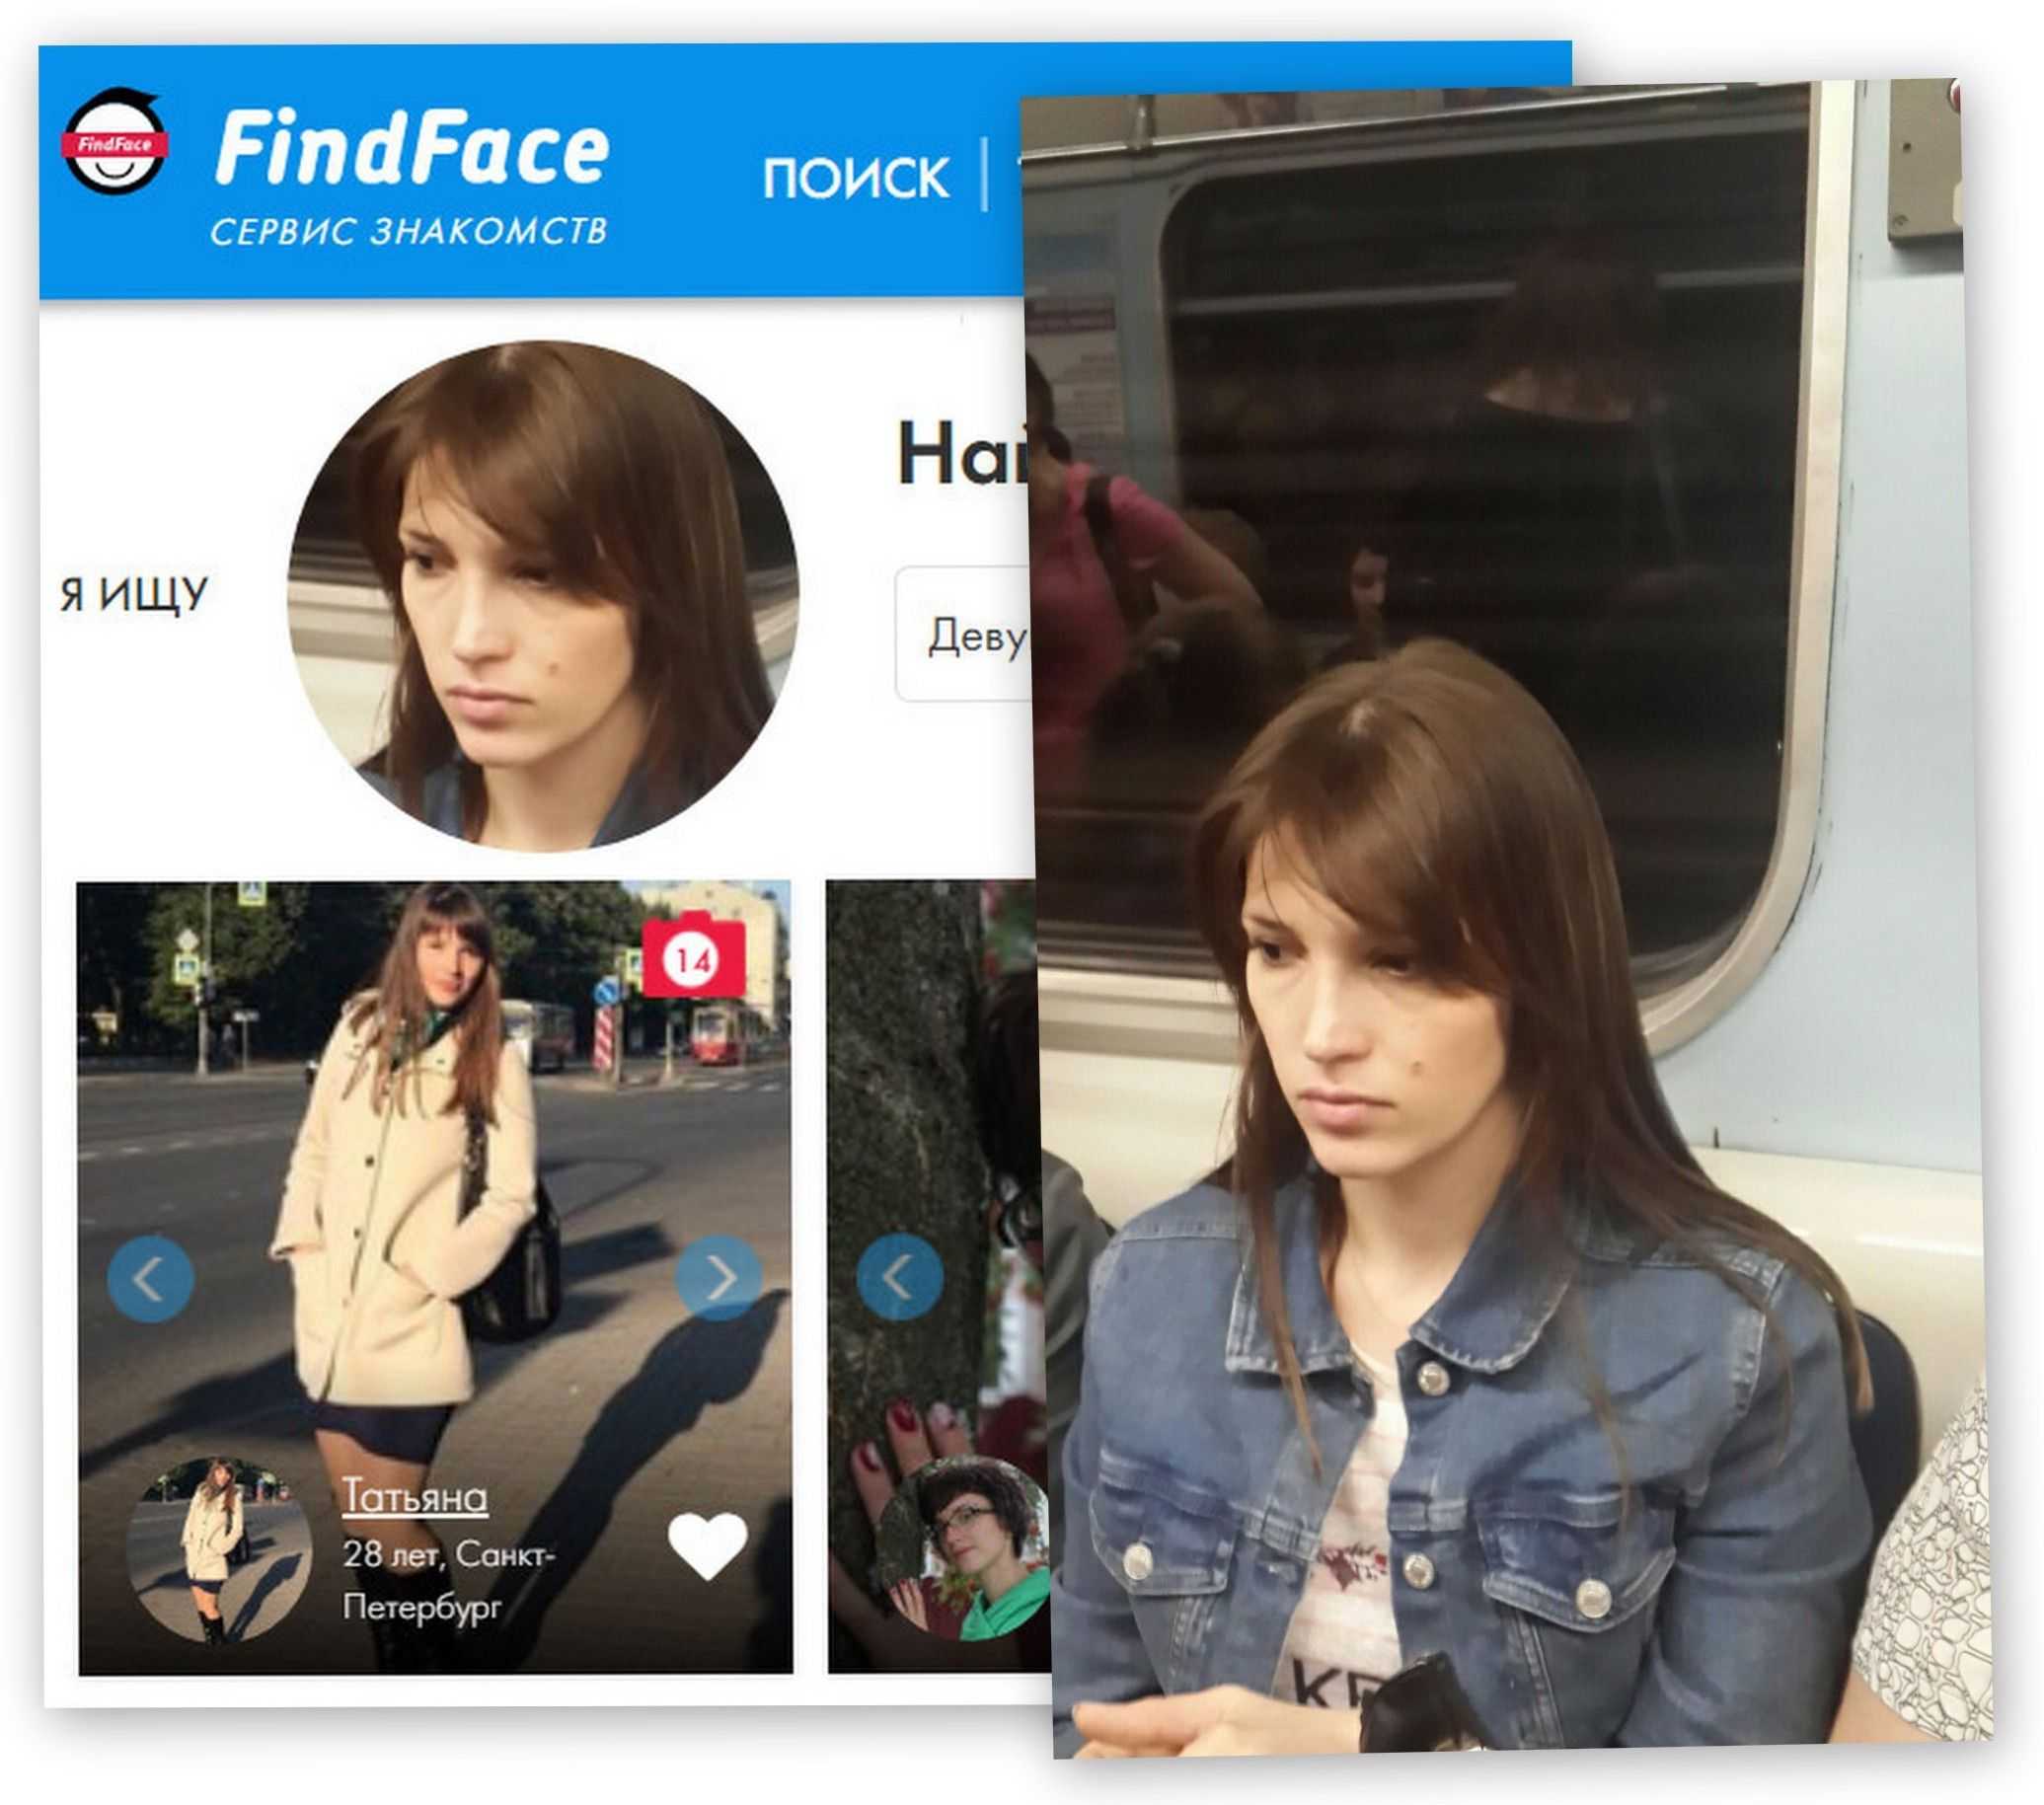 Findface ru - сервис поиска по фото: обзор, скачать, аналоги